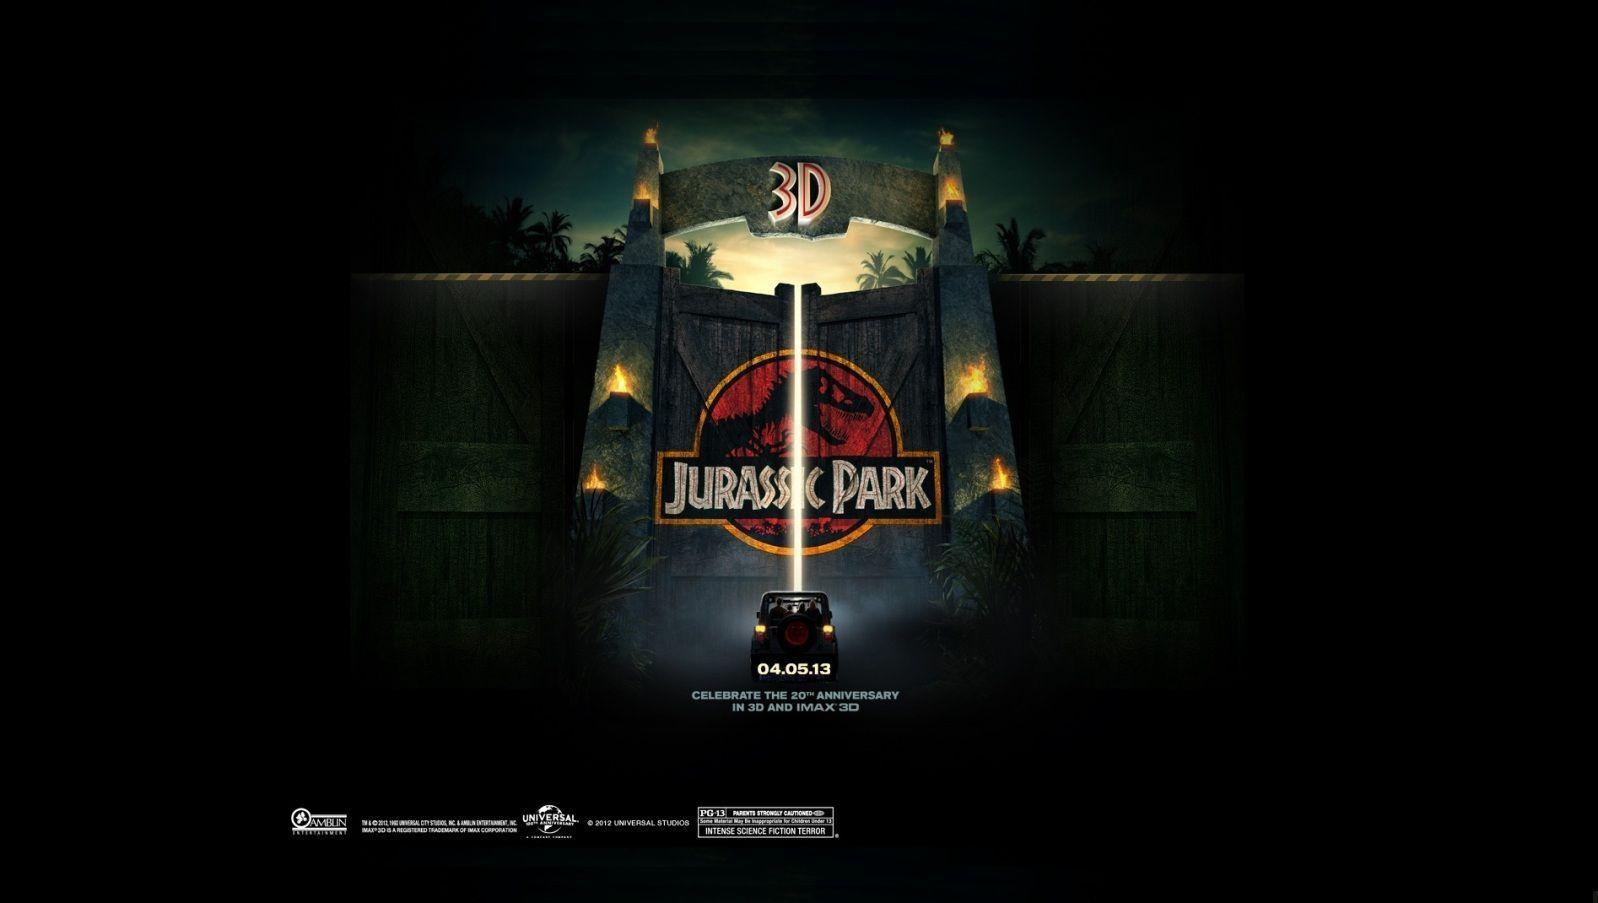 Jurassic Park 3D. The Reel Place